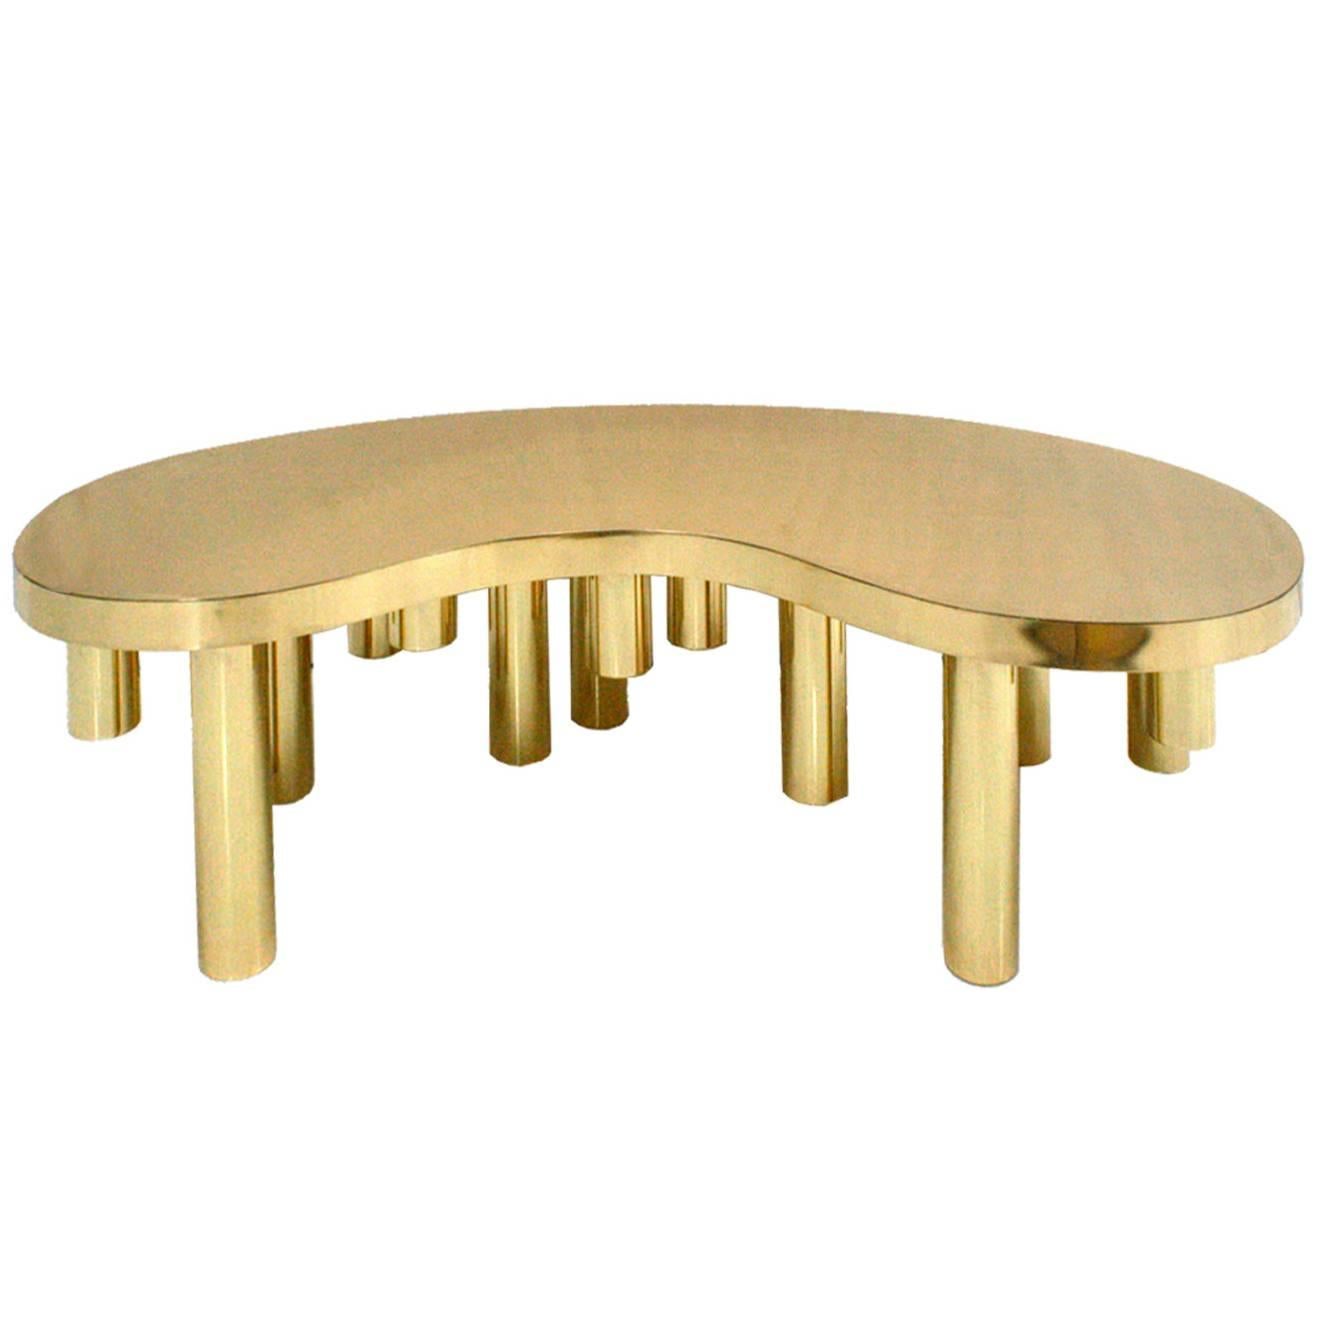 Center Table "Stalattite" Designed by Superego Studio